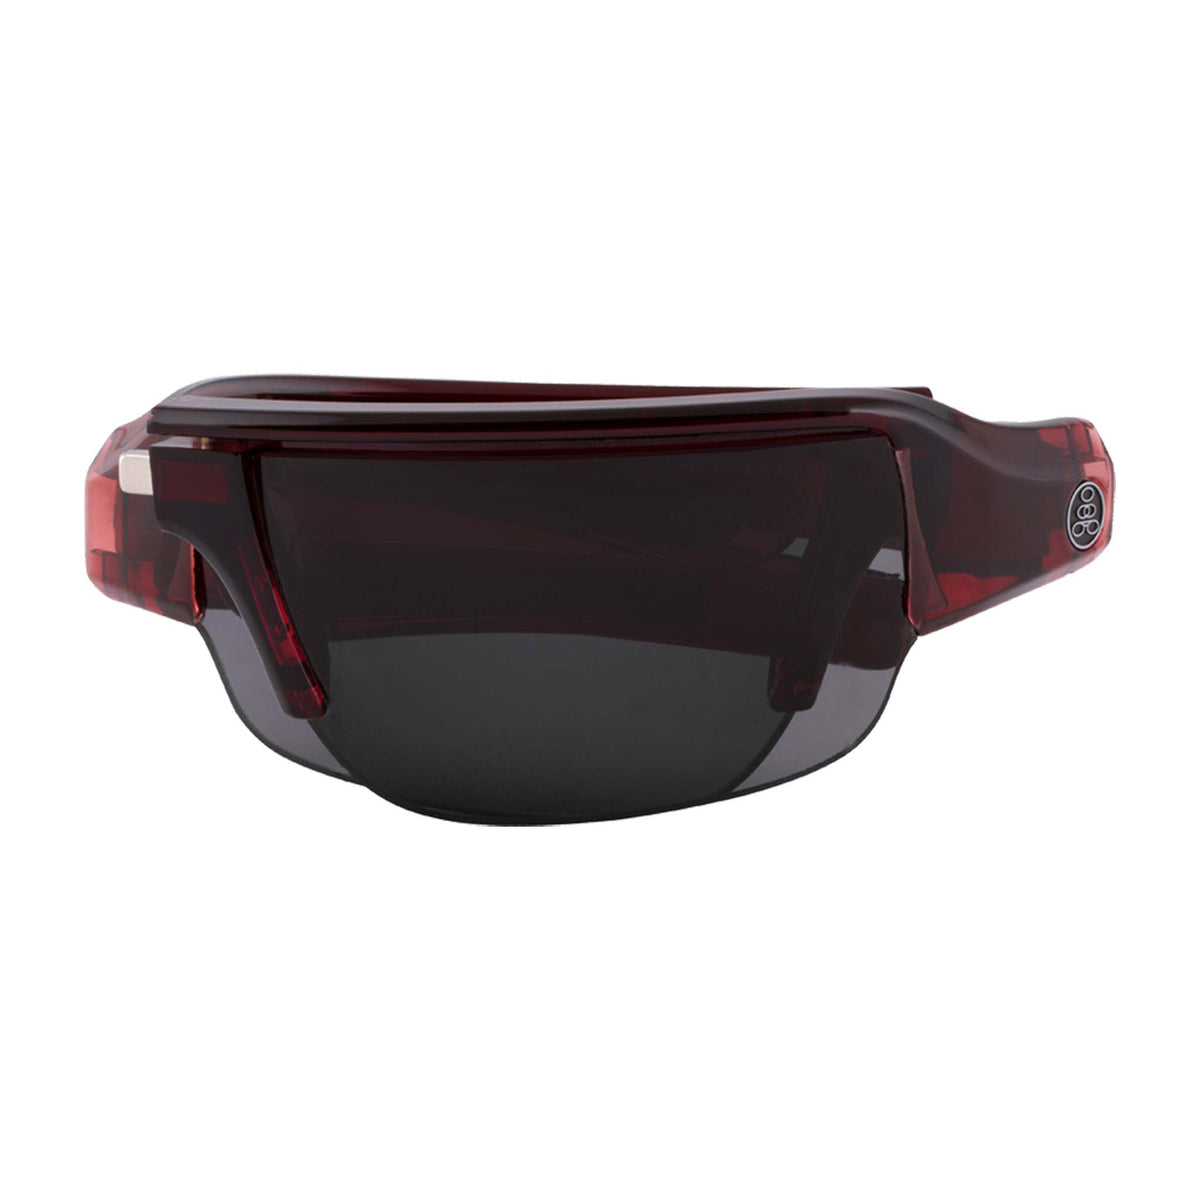 Popticals, Premium Compact Sunglasses, PopGun, 020010-WXGP, Polarized Sunglasses, Gloss Wine Crystal Frame, Gray Lenses, Compact View